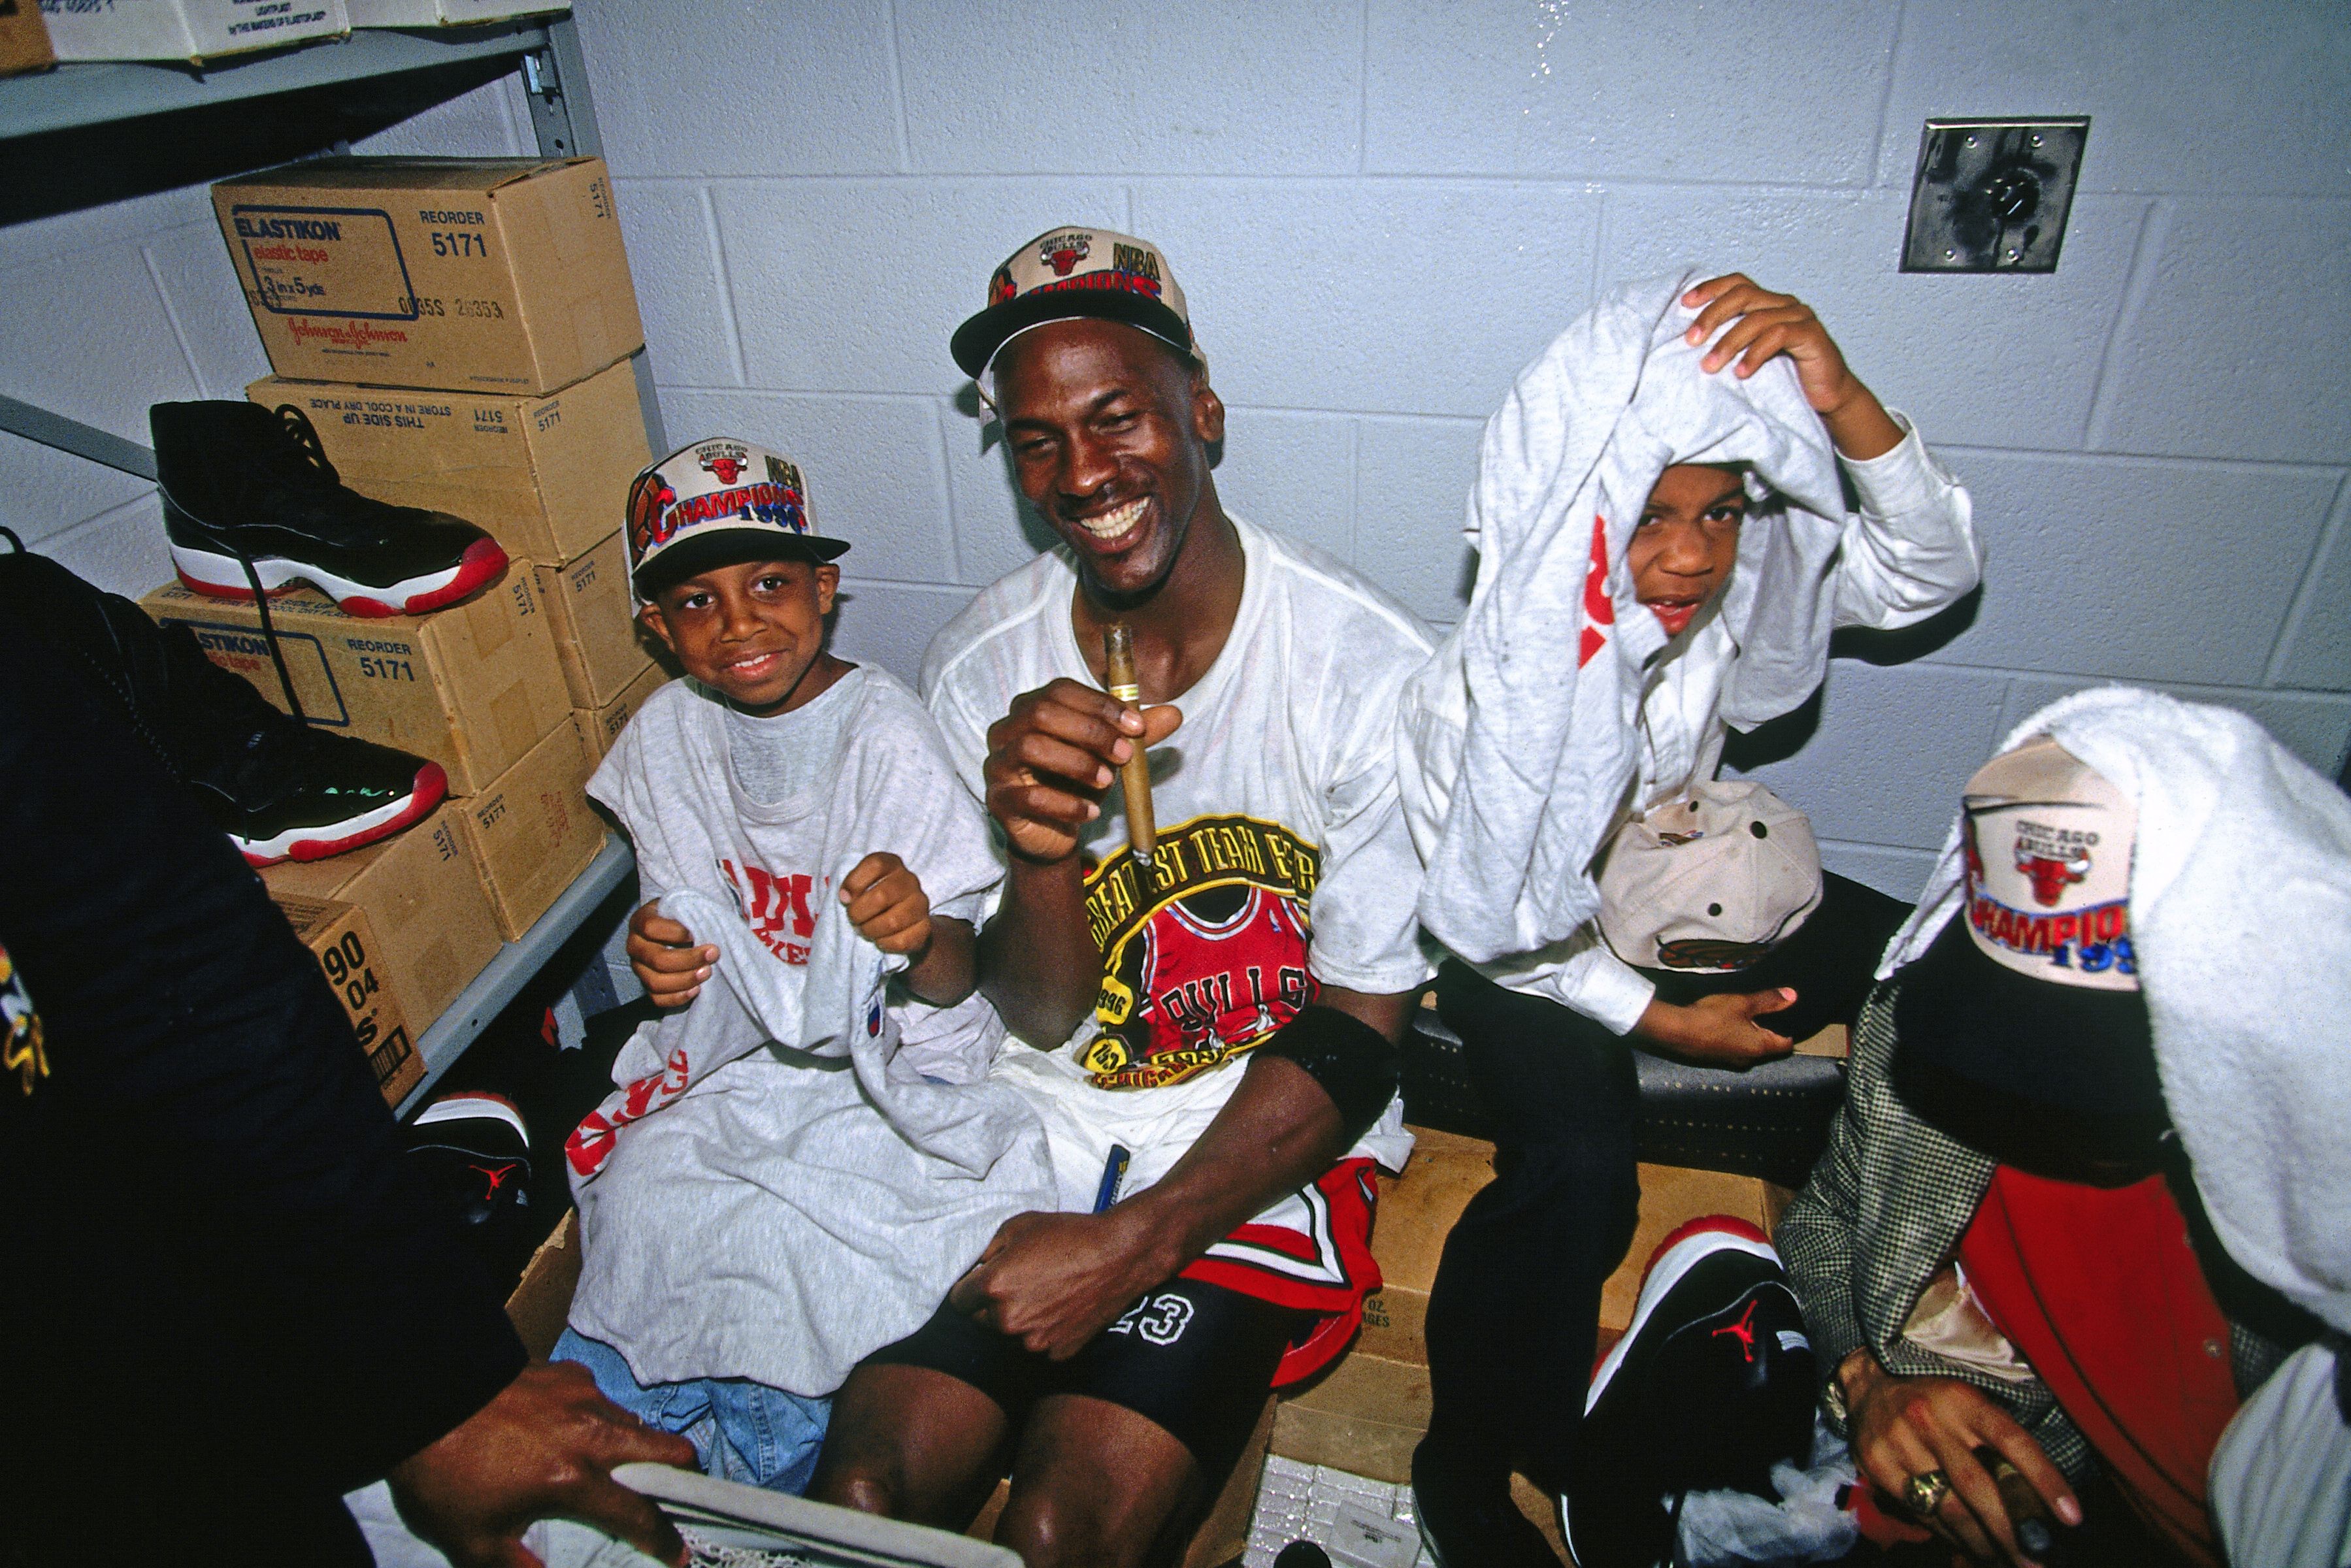 Vintage 1996 Chicago Bulls Greatest Team Ever Starter Shirt